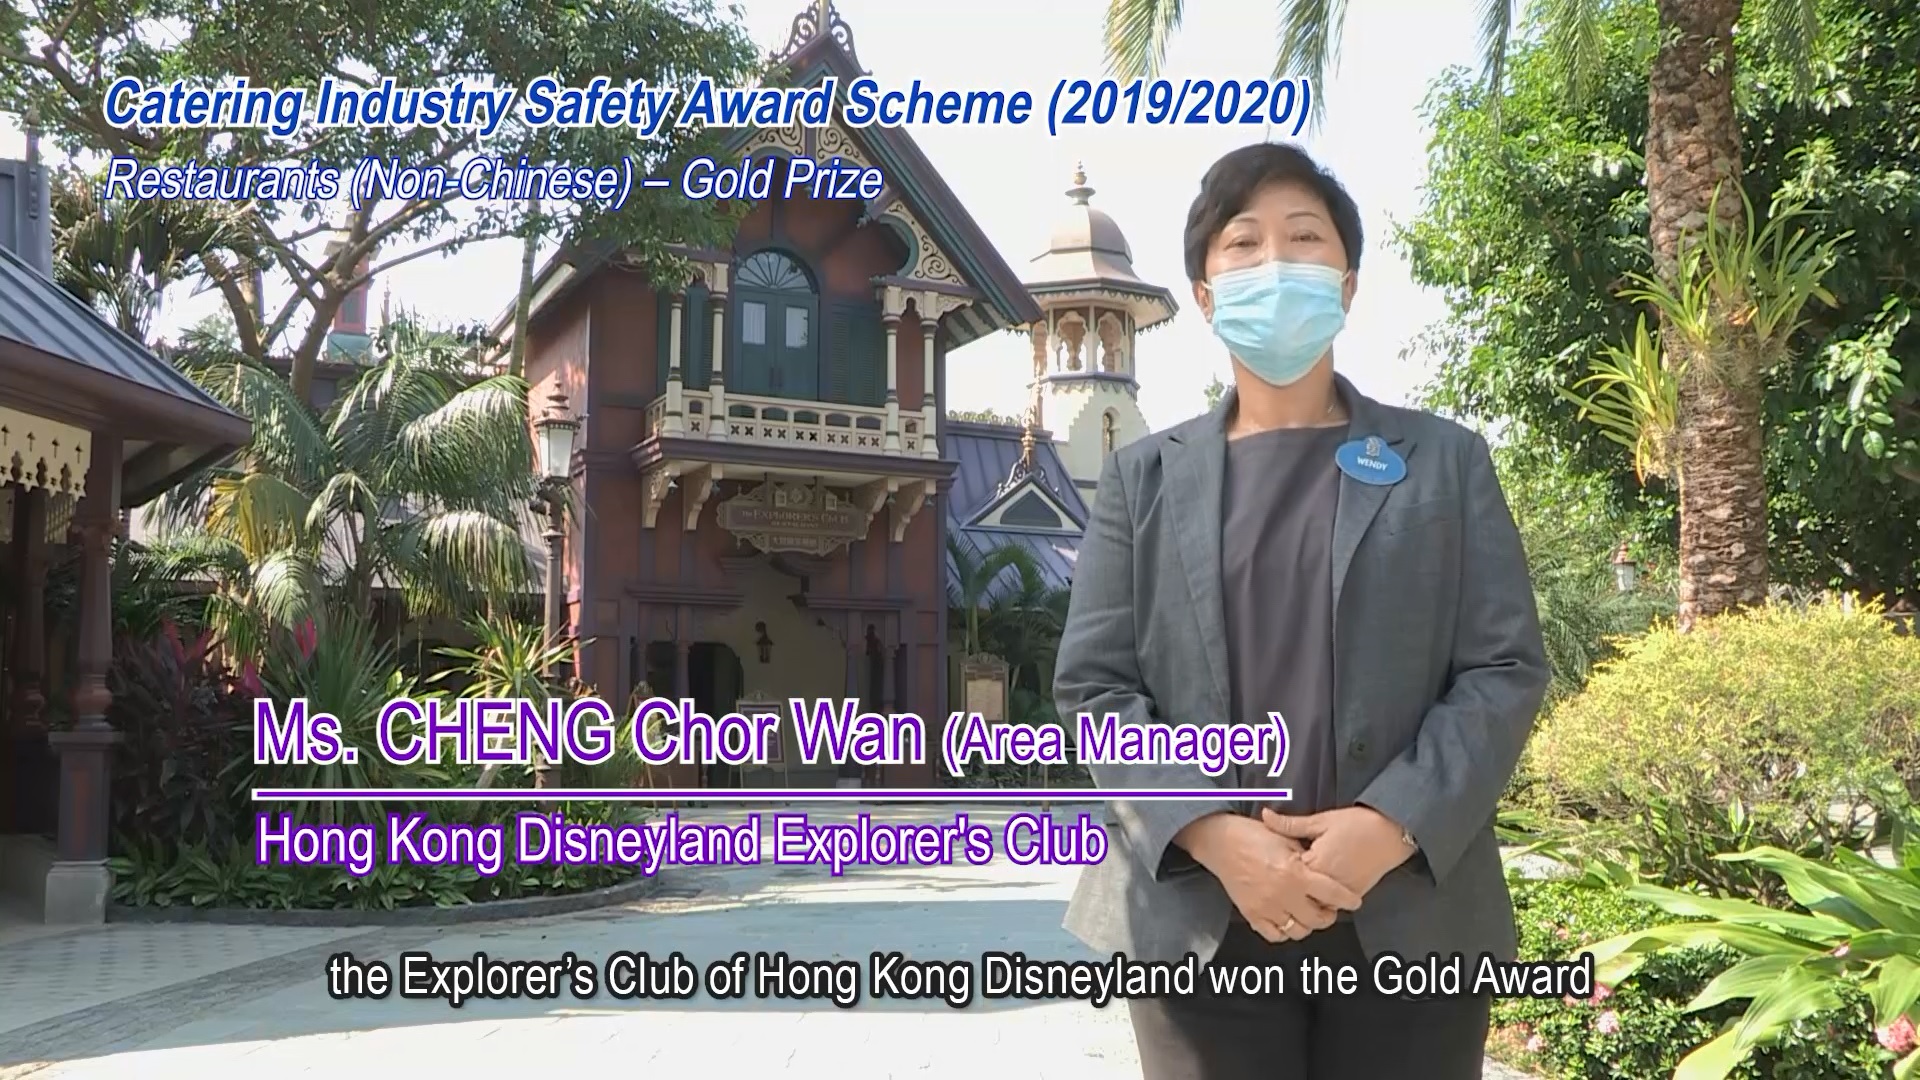 Hong Kong Disneyland Explorer’s Club Restaurants (Non-Chinese) Sub-category